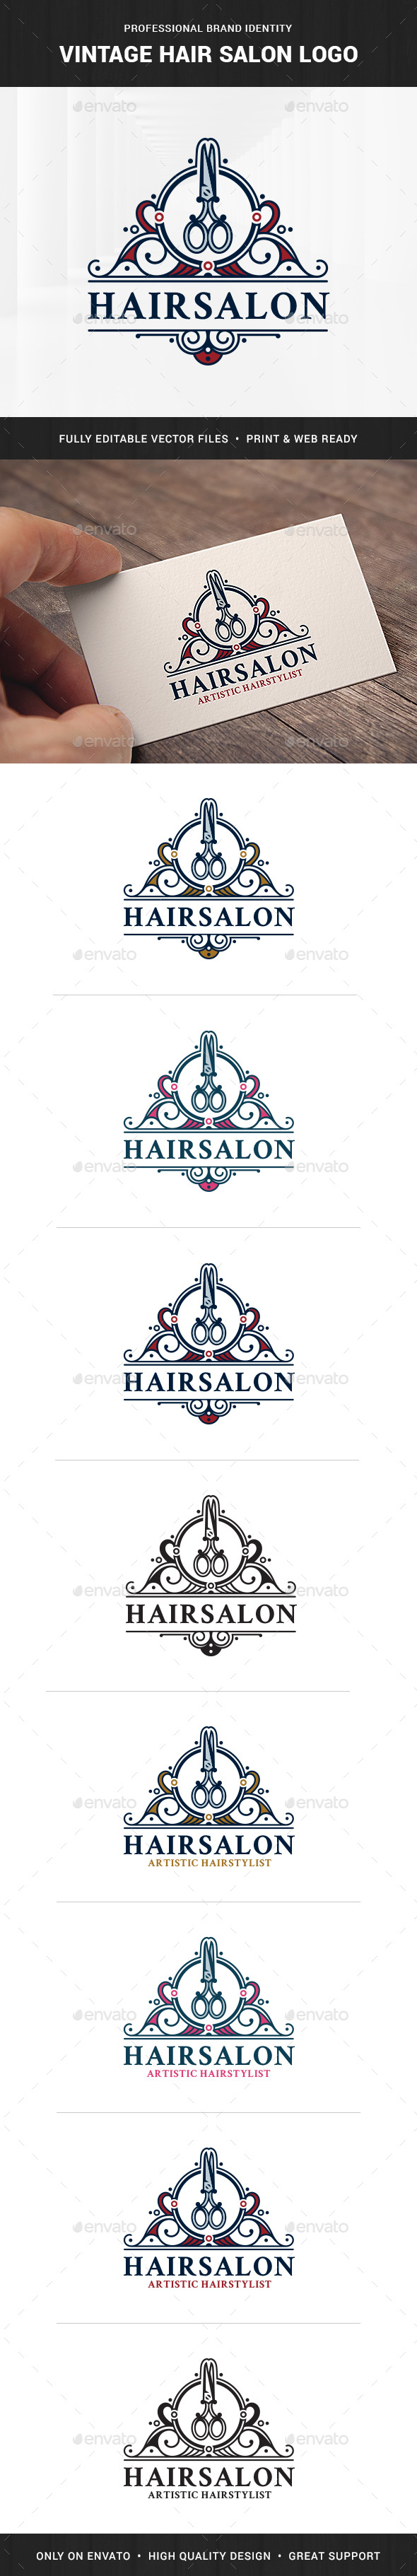 Vintage Hair Salon Logo Template